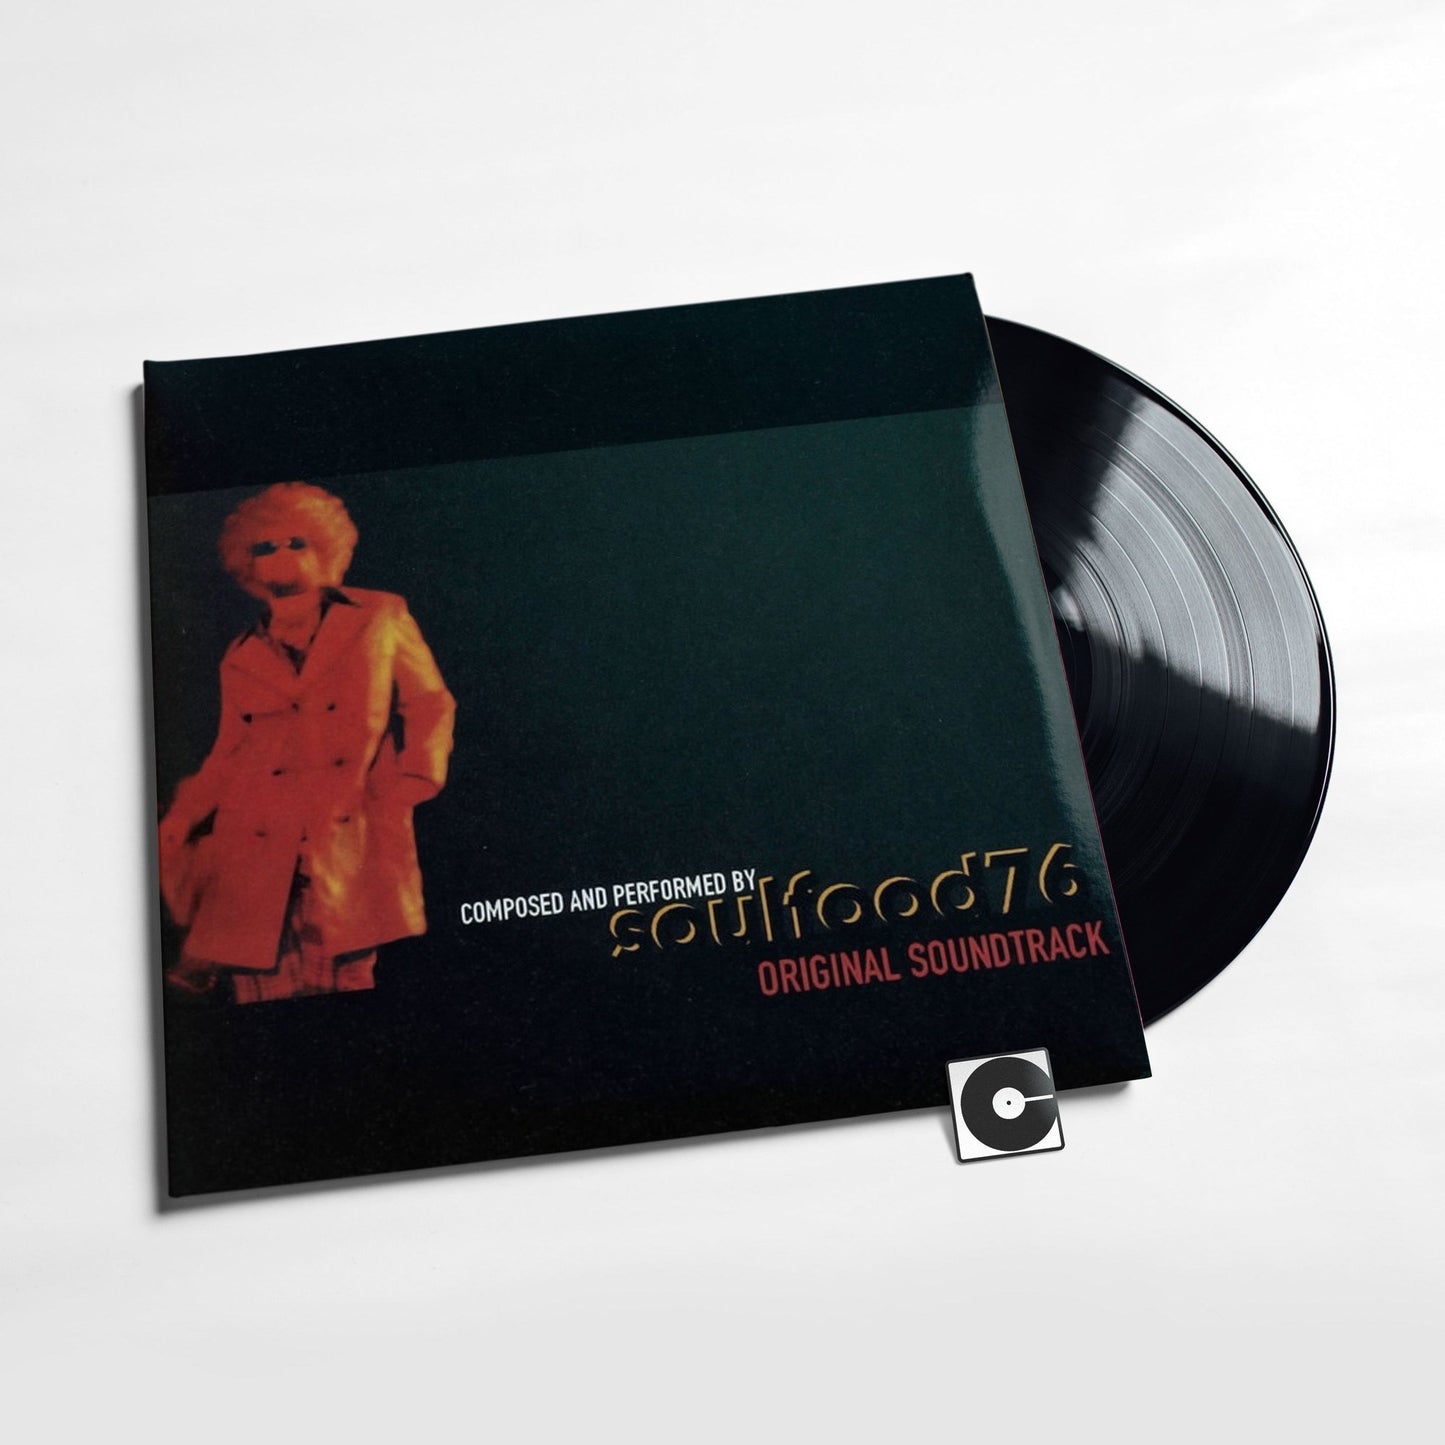 Soulfood 76 - "Original Soundtrack"